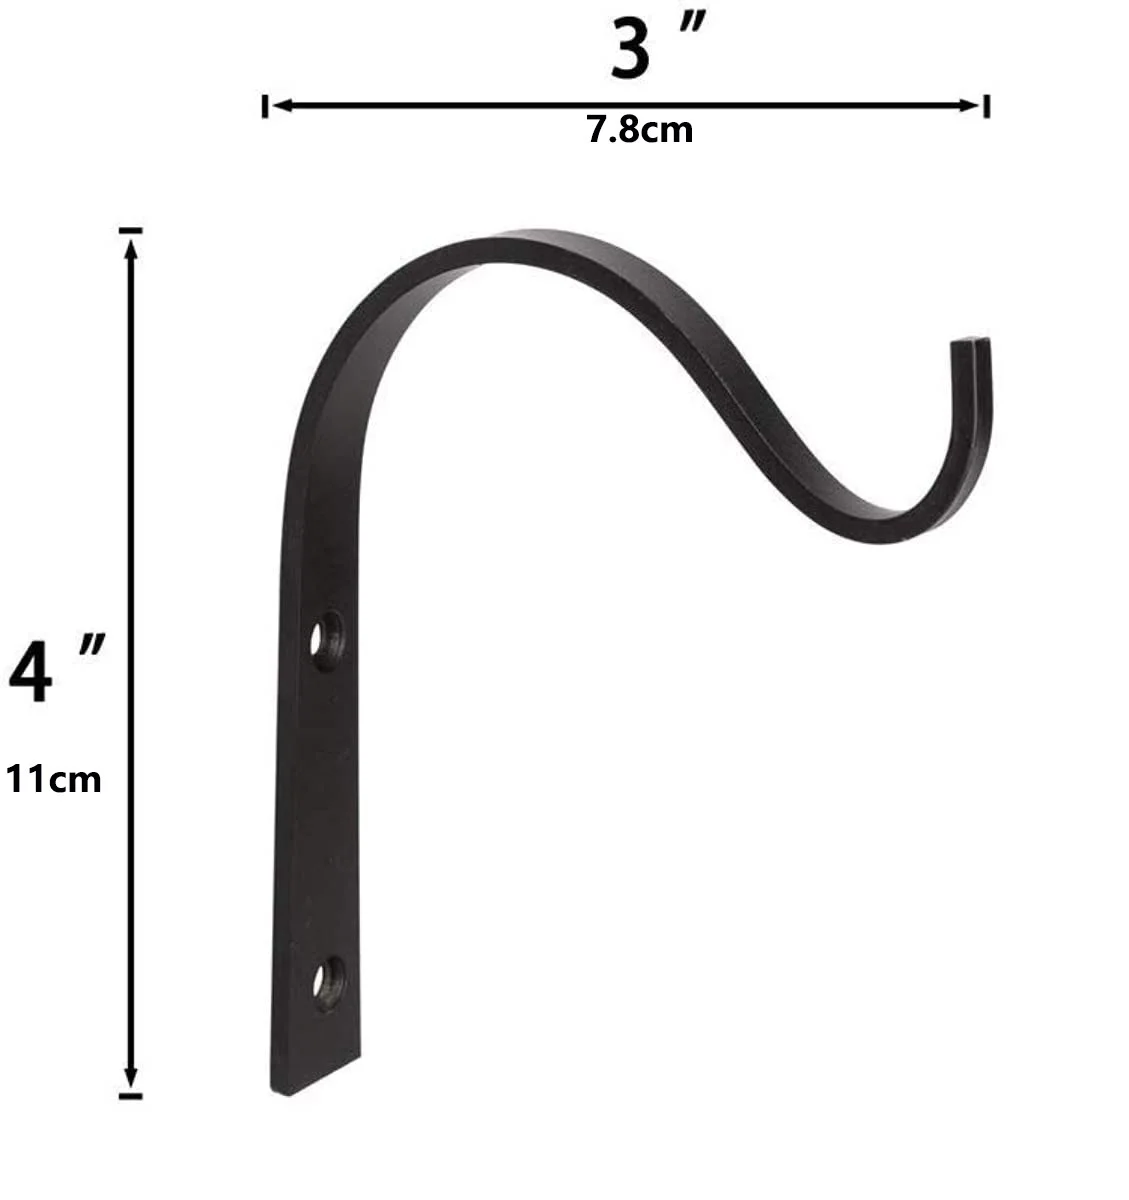 https://ae01.alicdn.com/kf/S51b7ca18db1b425cb2f97aab14a29a1bk/Rustic-Iron-Wall-Hooks-for-Hanging-Lanterns-Coats-Multi-Purpose-Hooks-Heavy-Duty-Metal-Hooks-for.jpg